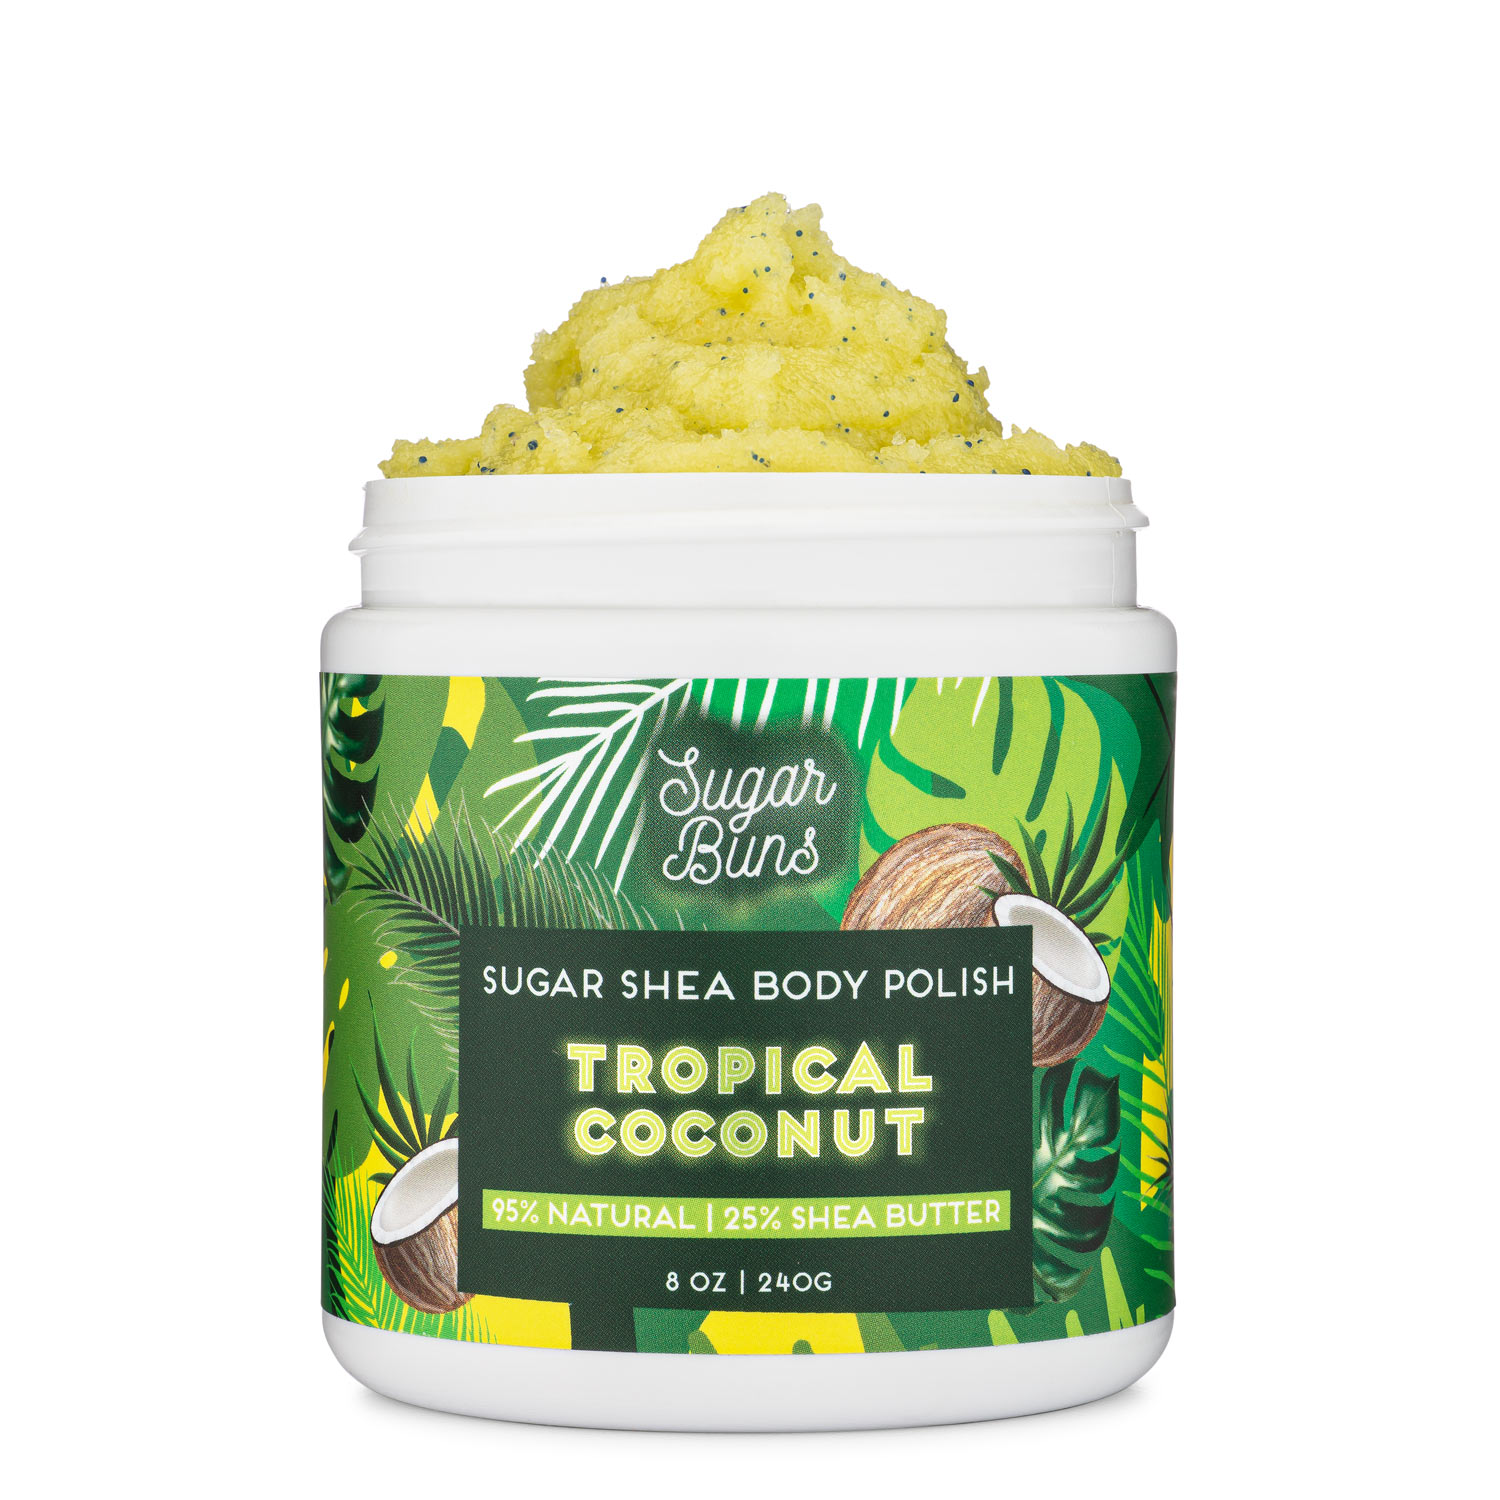 Sugar Shea Body Polish - Tropical Coconut Sugar Buns Image